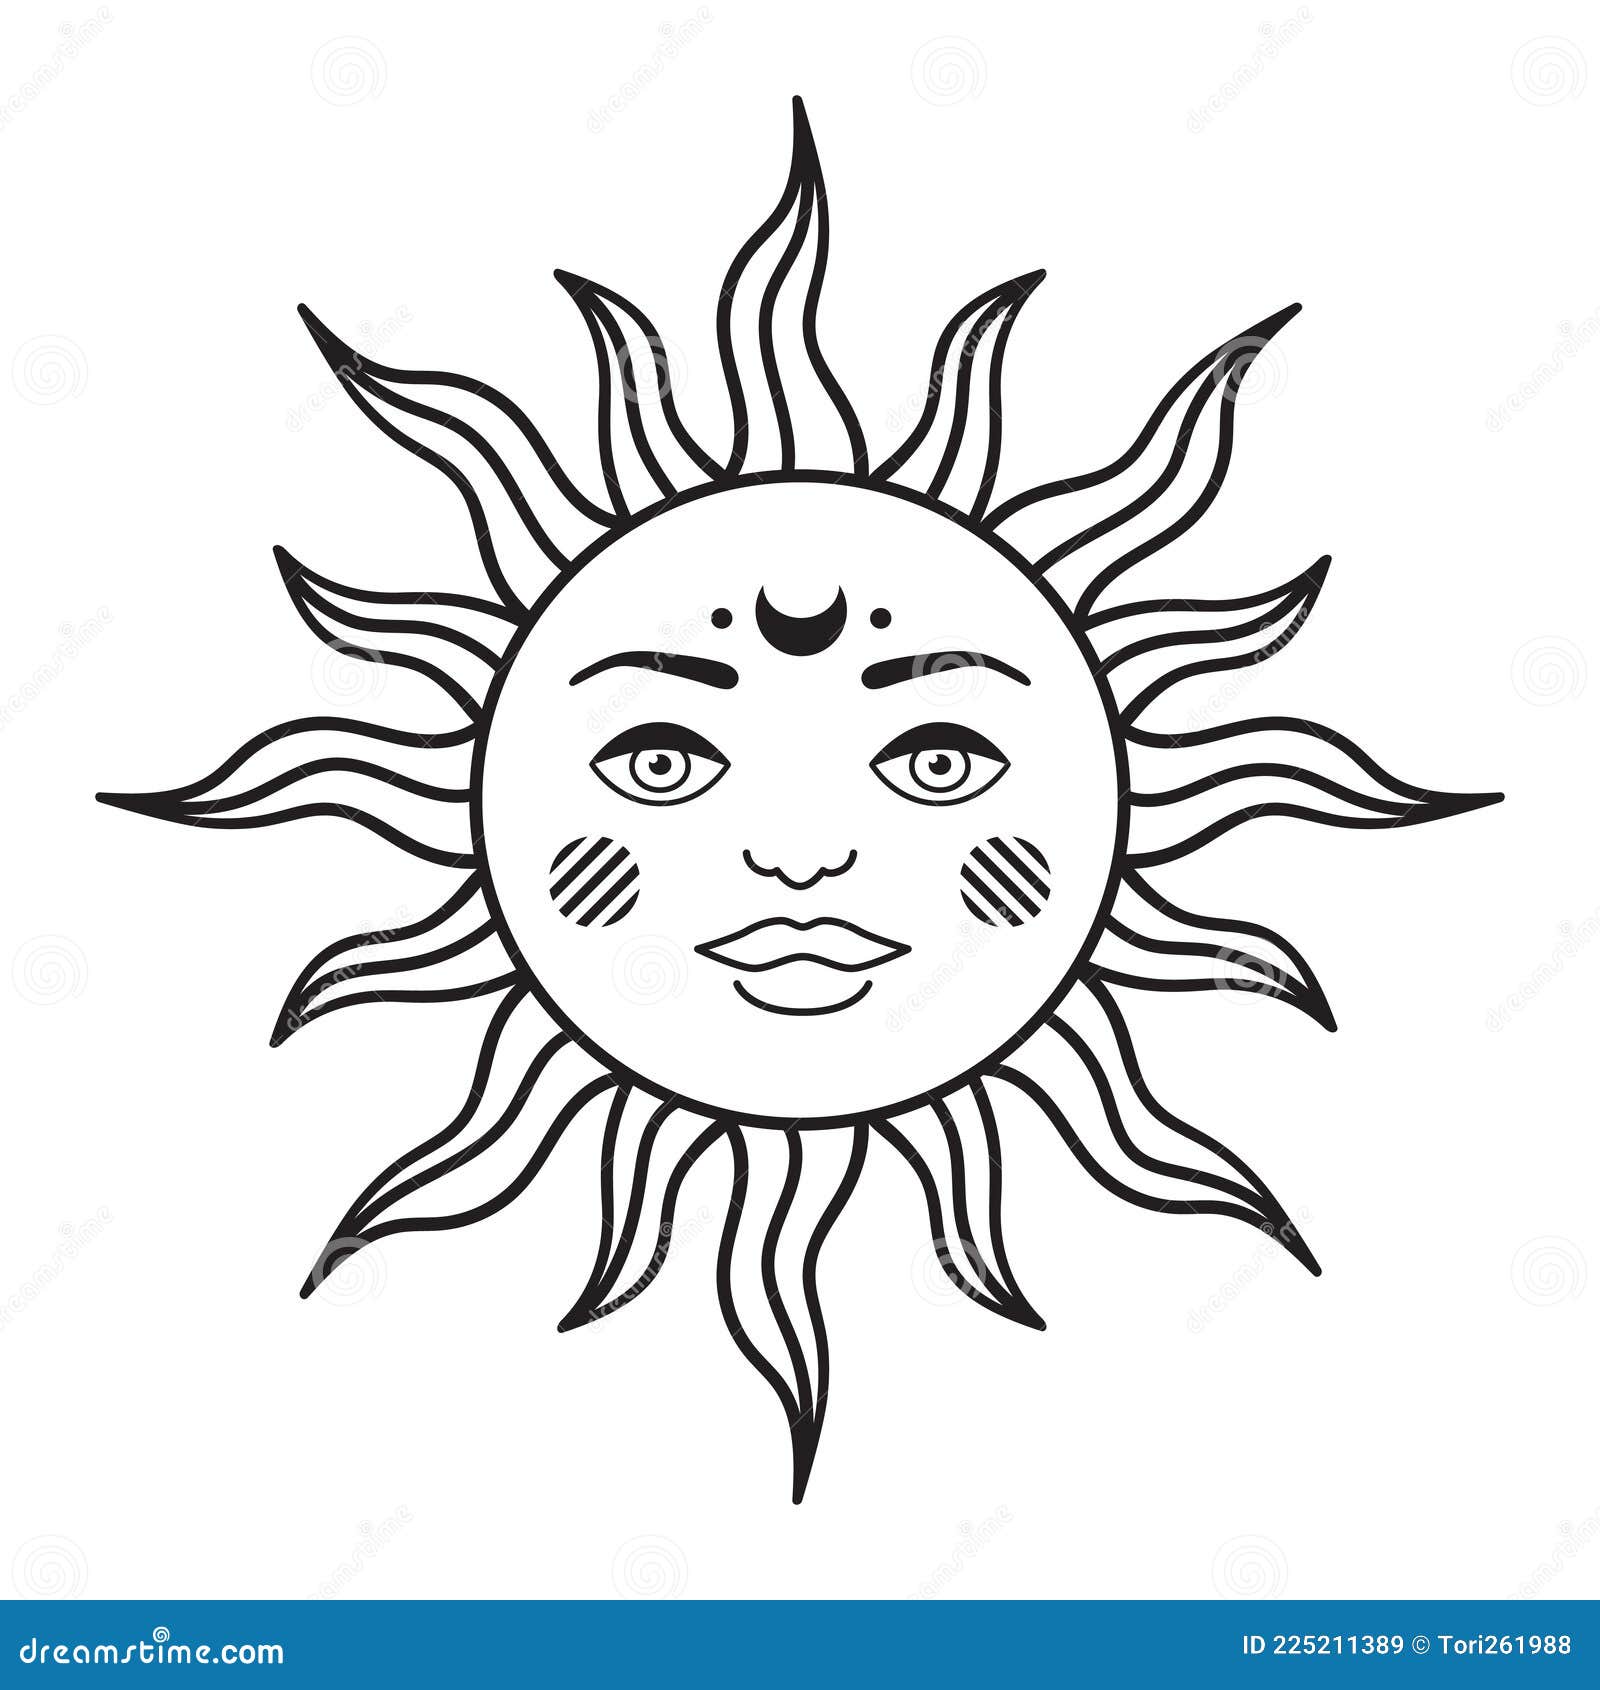 Bohemian Illustration Celestial Vintage Design Sun With Face